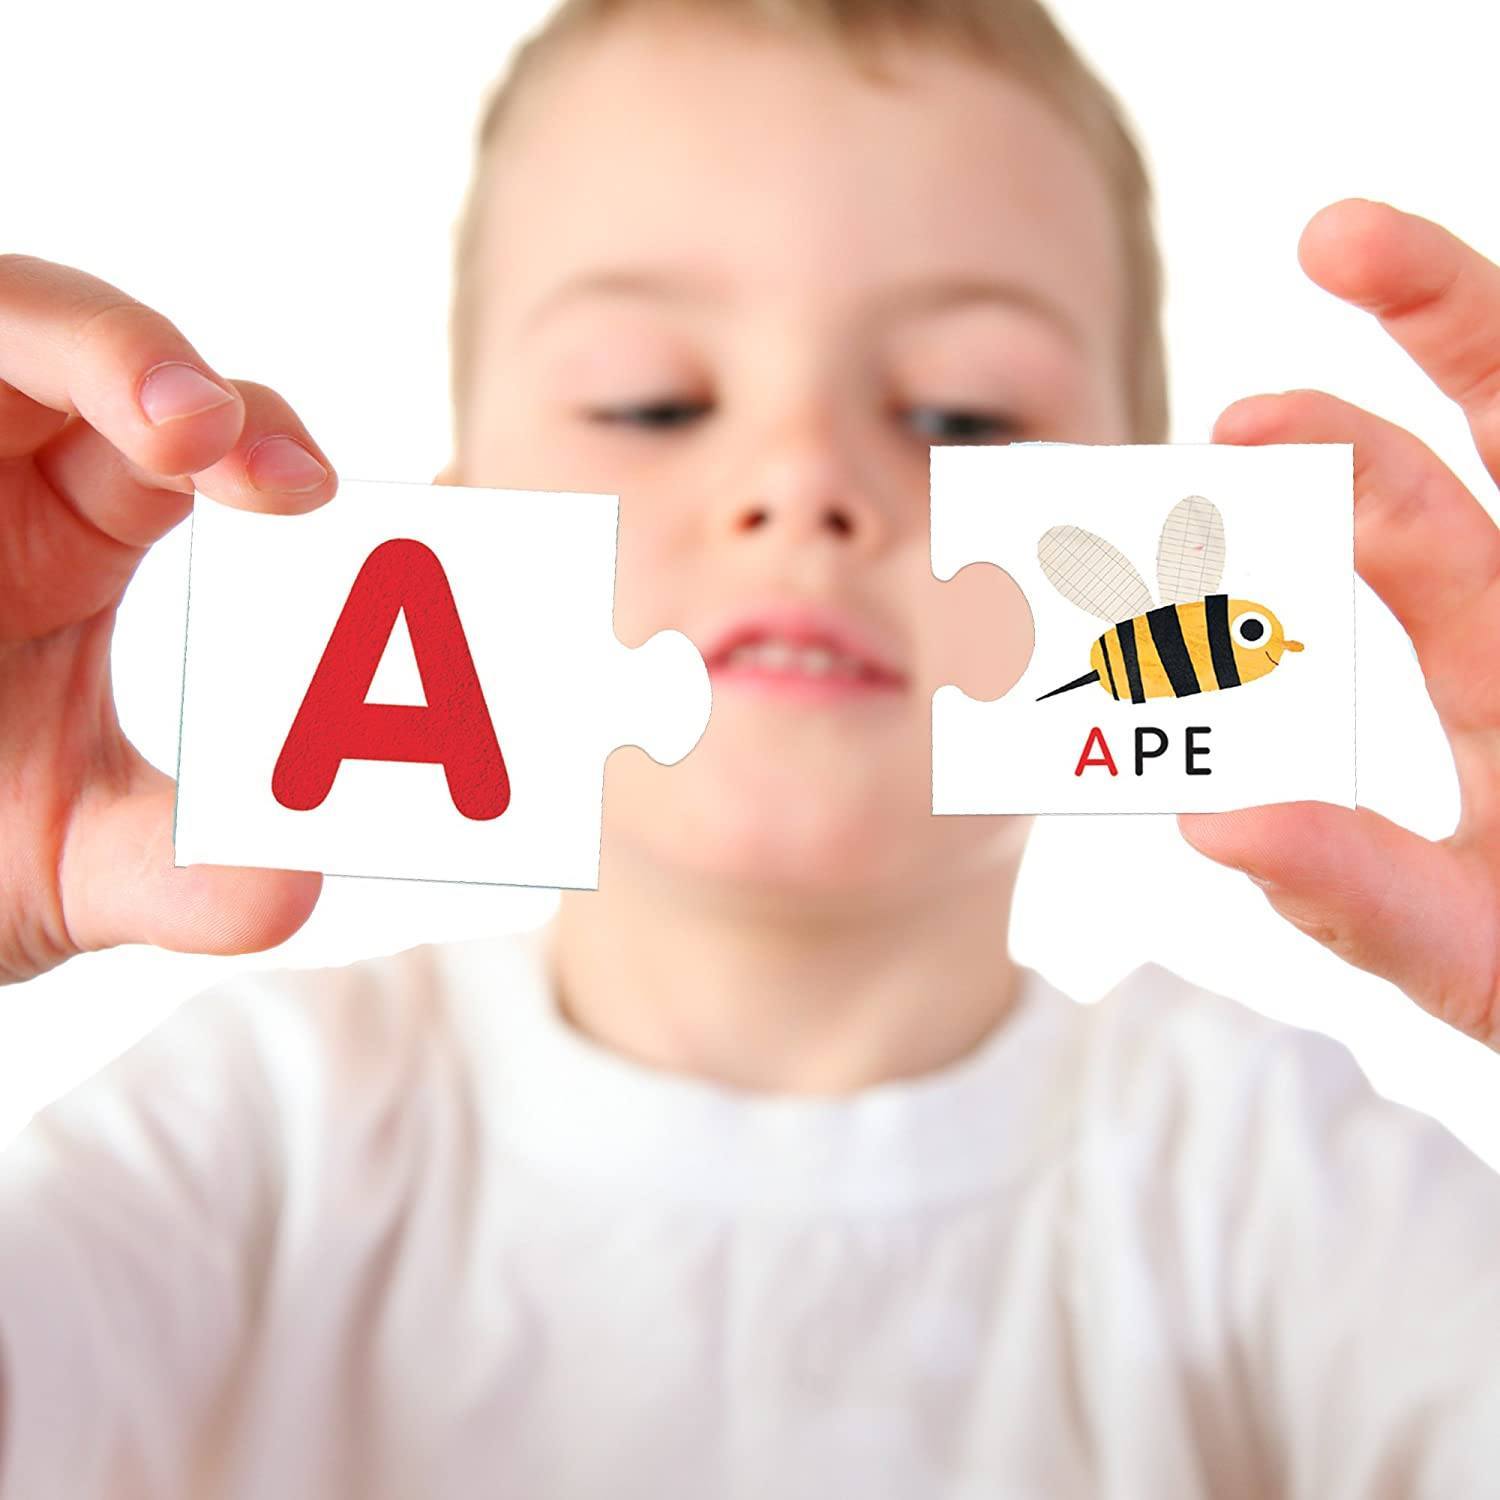 Alfabeto Tattile Montessori HEADU 